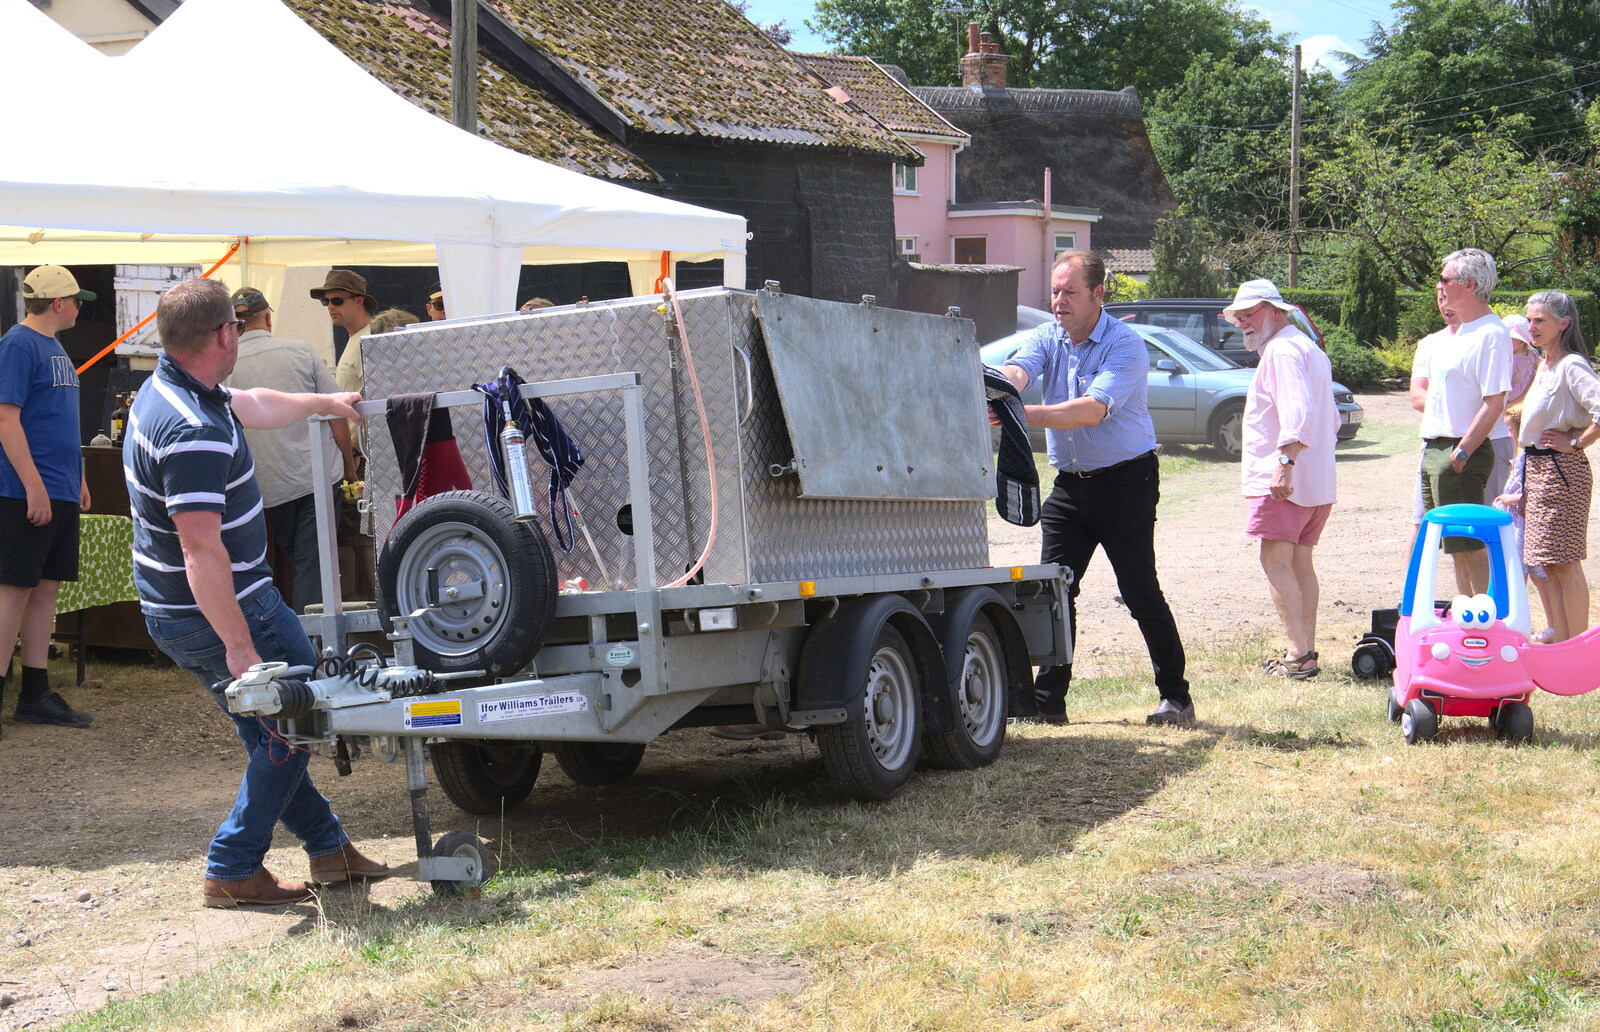 The Hog trailer arrives from A Village Hog Roast, Little Green, Thrandeston, Suffolk - 24th June 2018